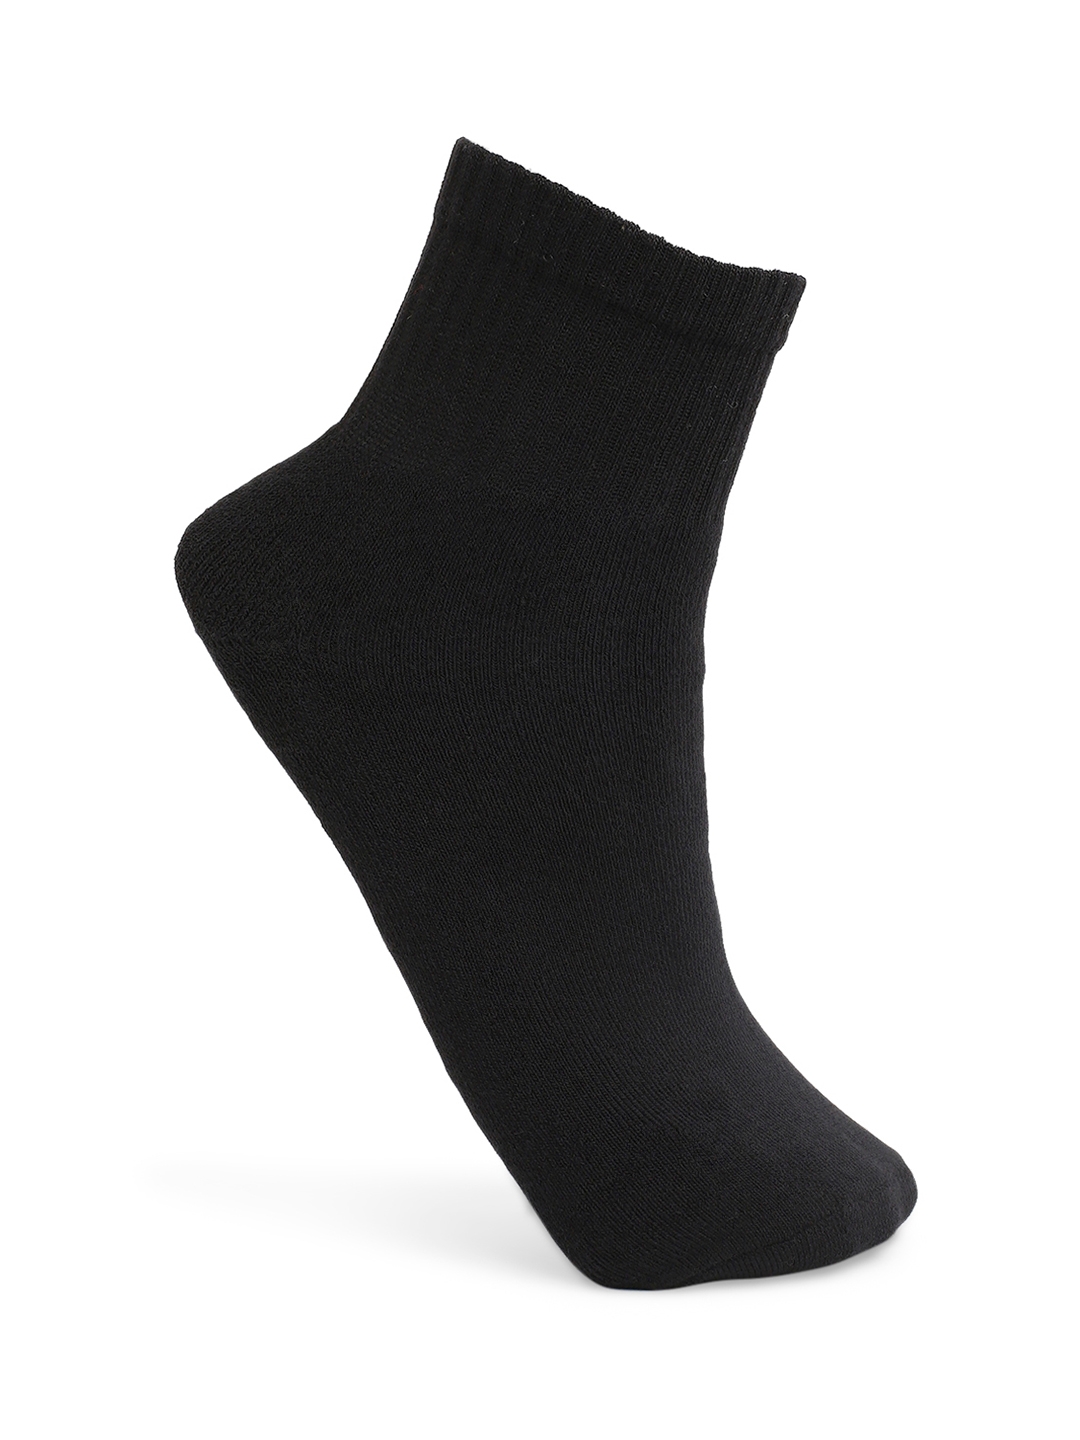 Underjeans by Spykar Men Black Cotton Socks - Pack Of 3